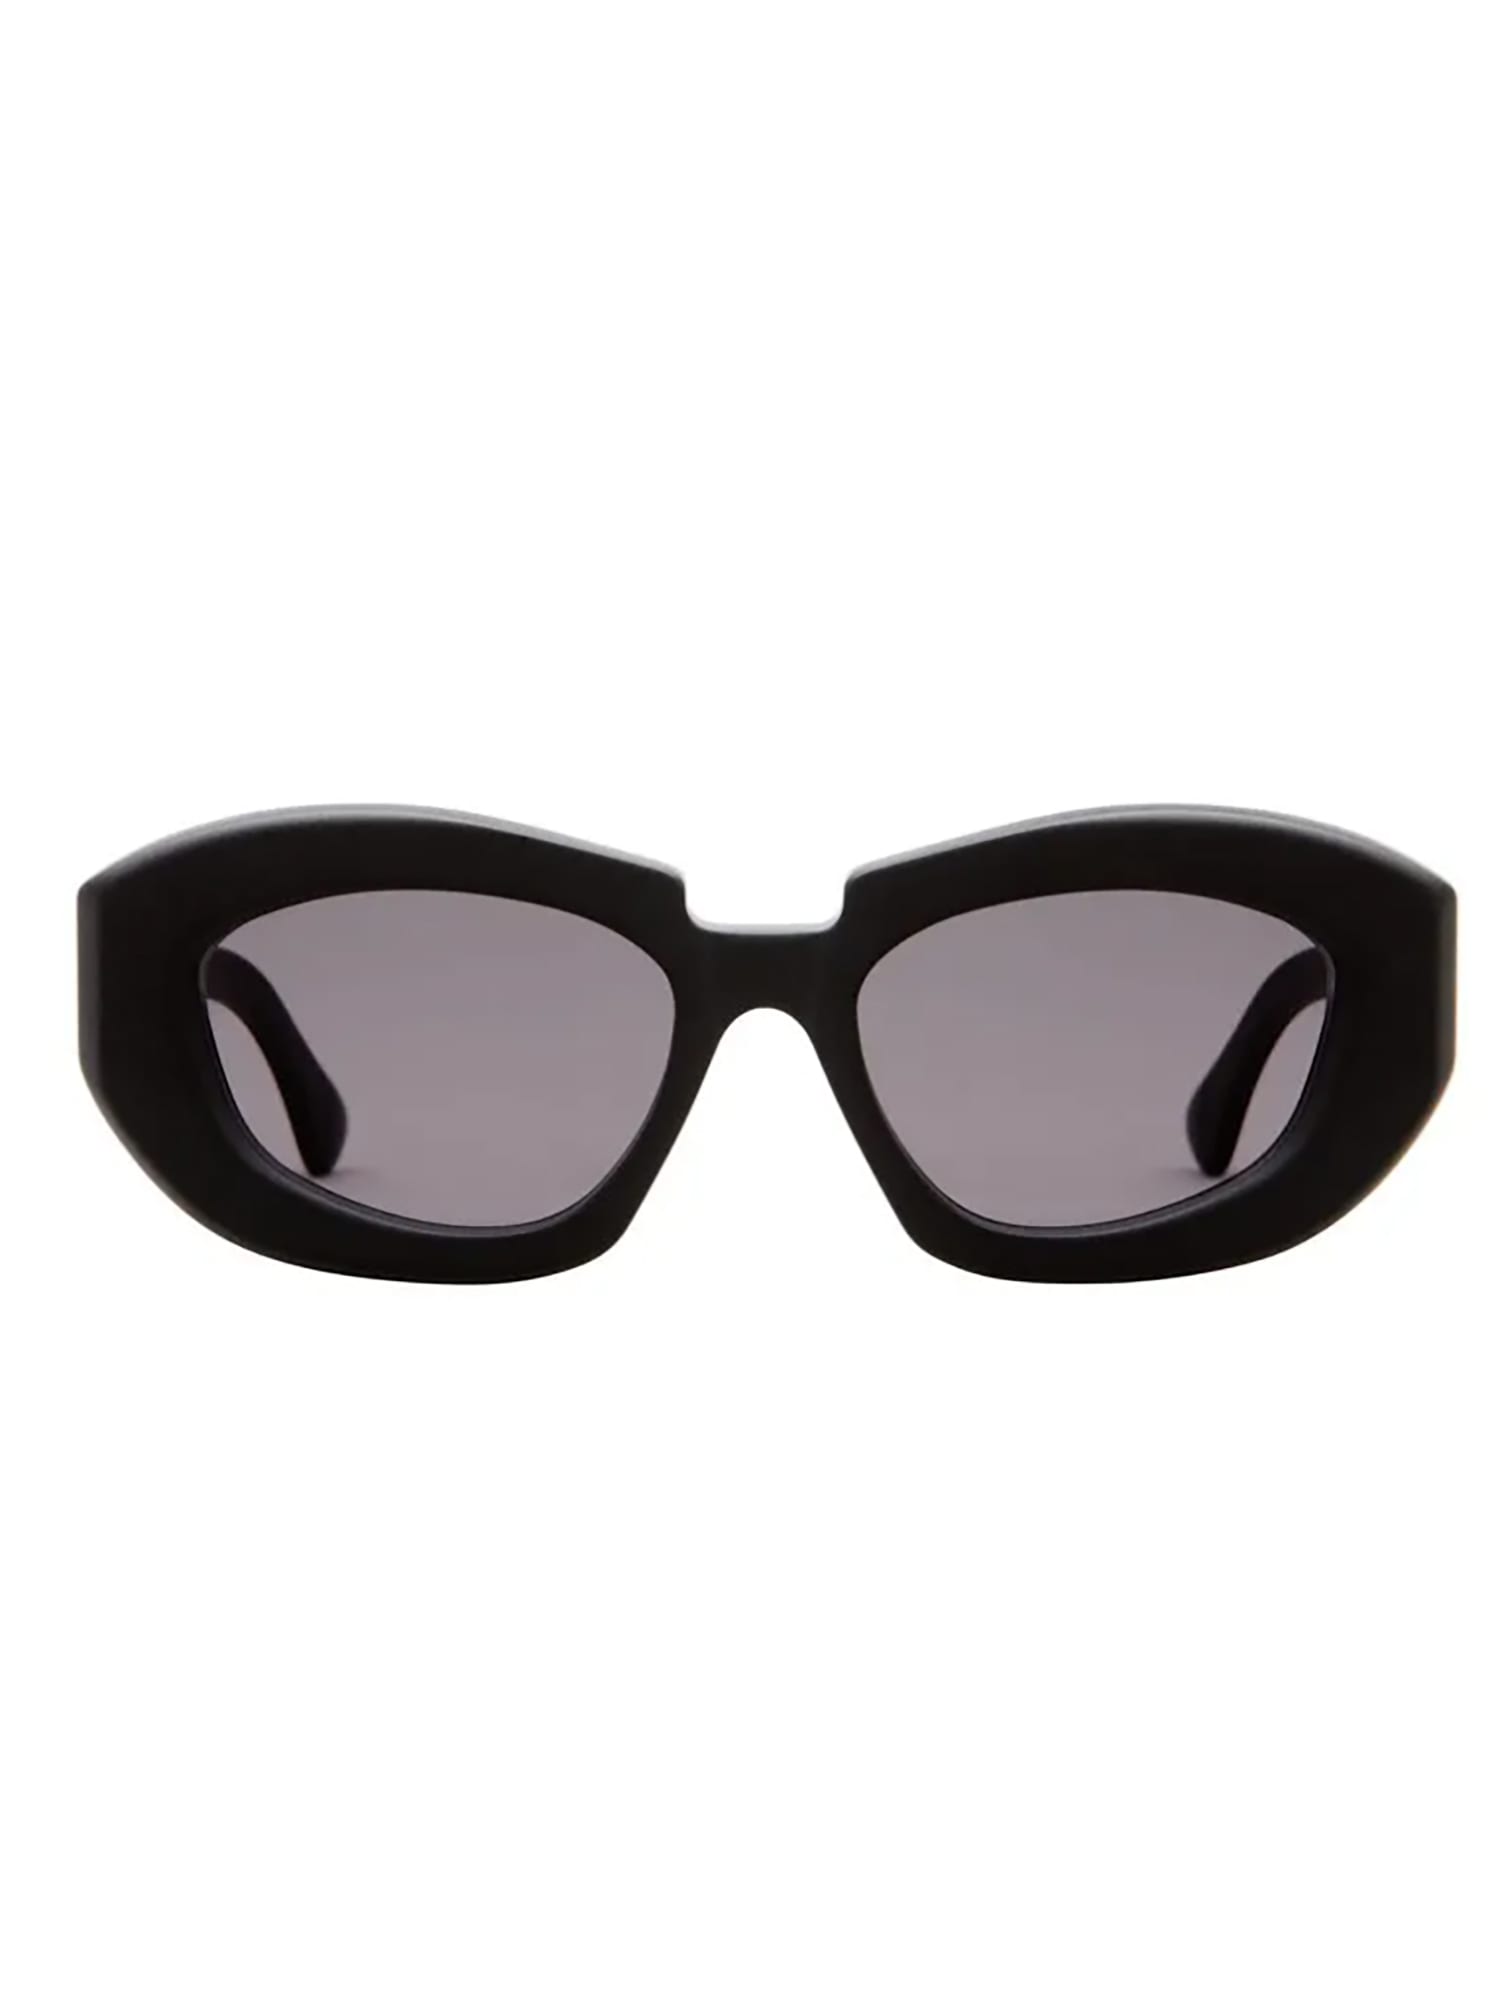 X23 Sunglasses